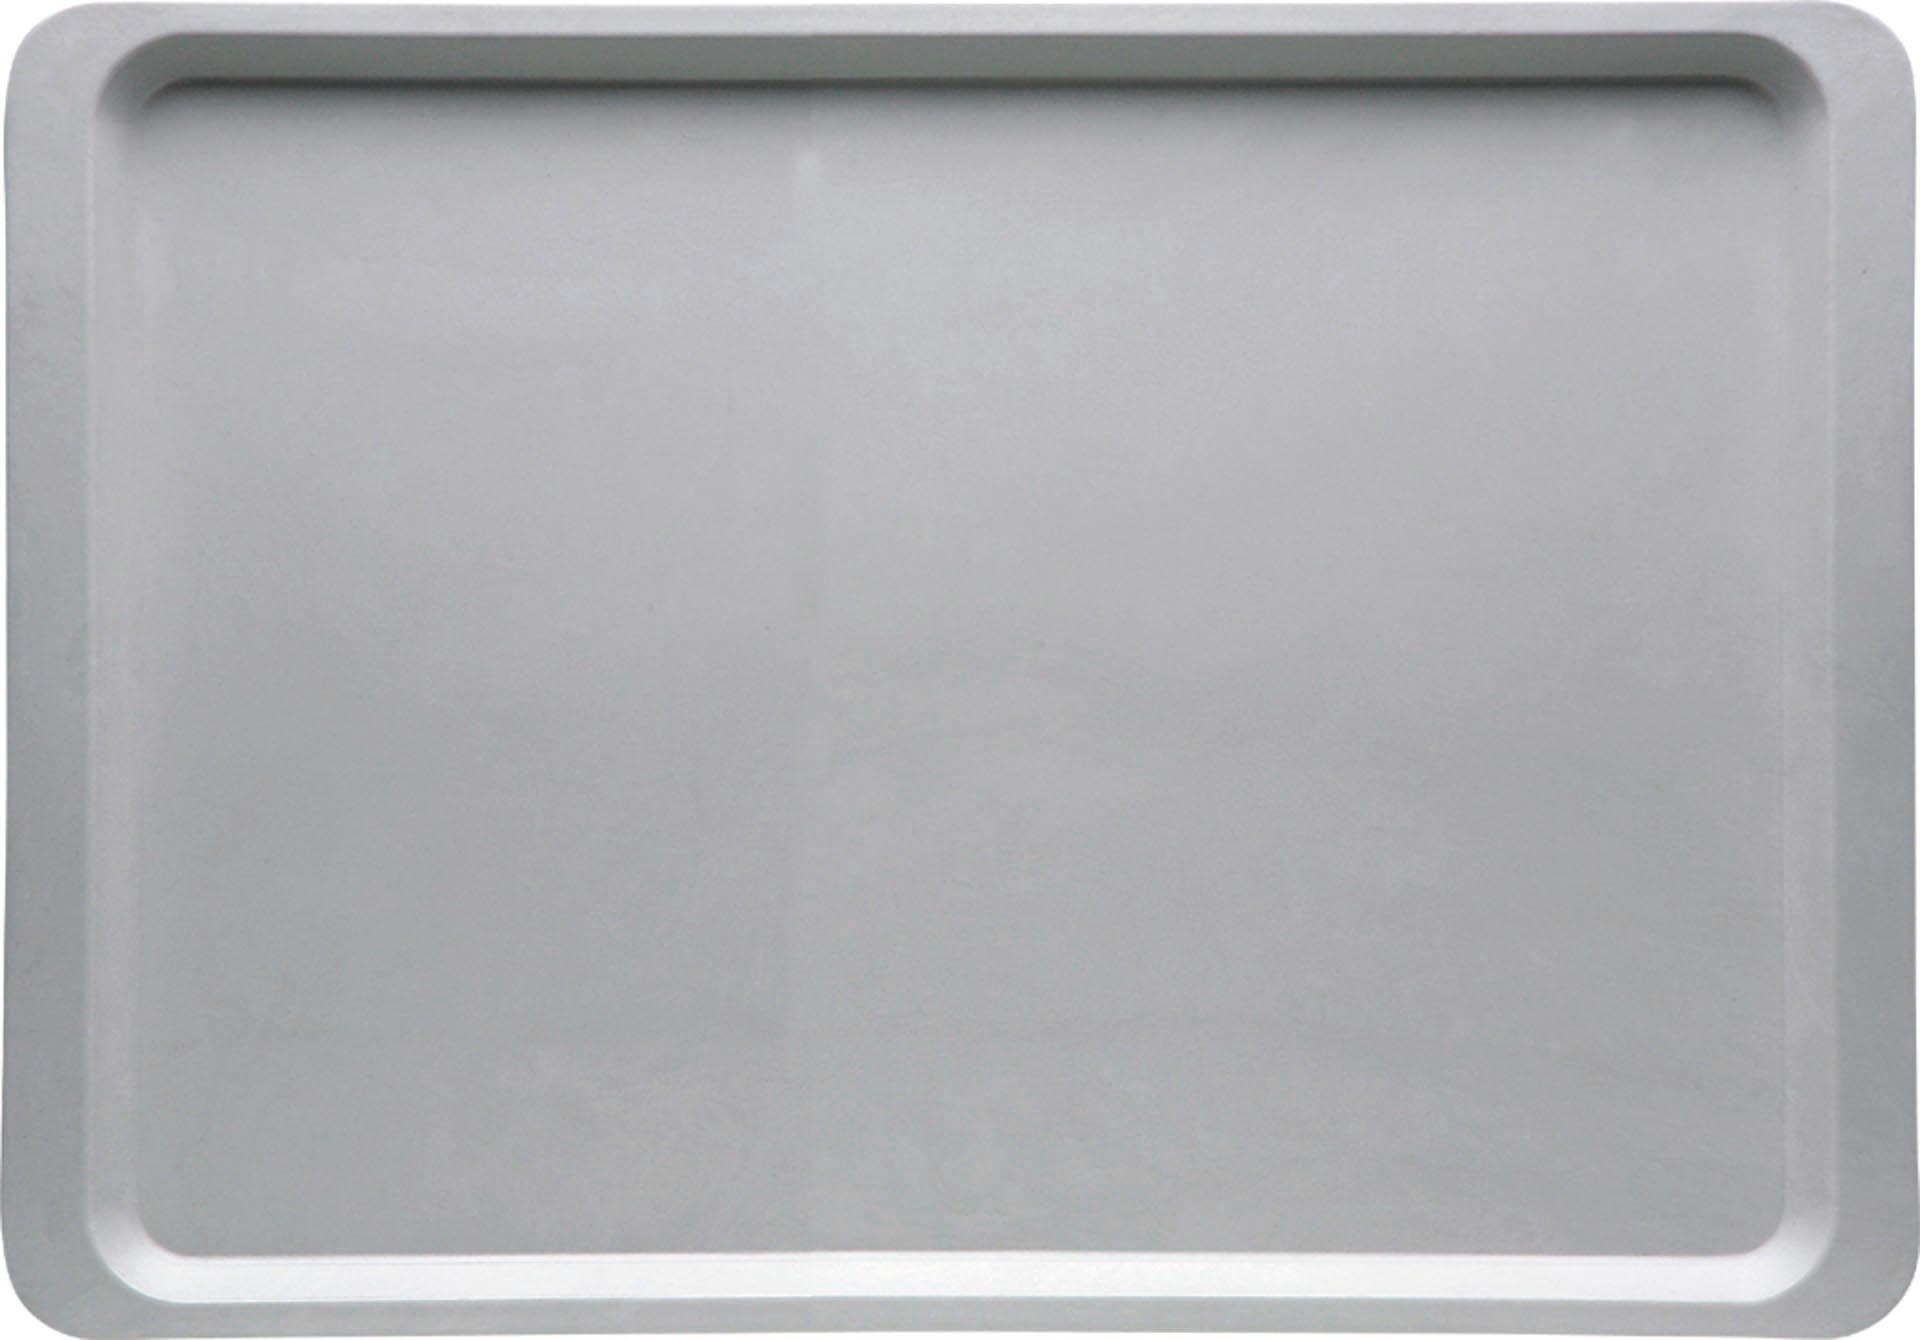 Euronorm-Tablett 53x37 cm, lichtgrau S.165